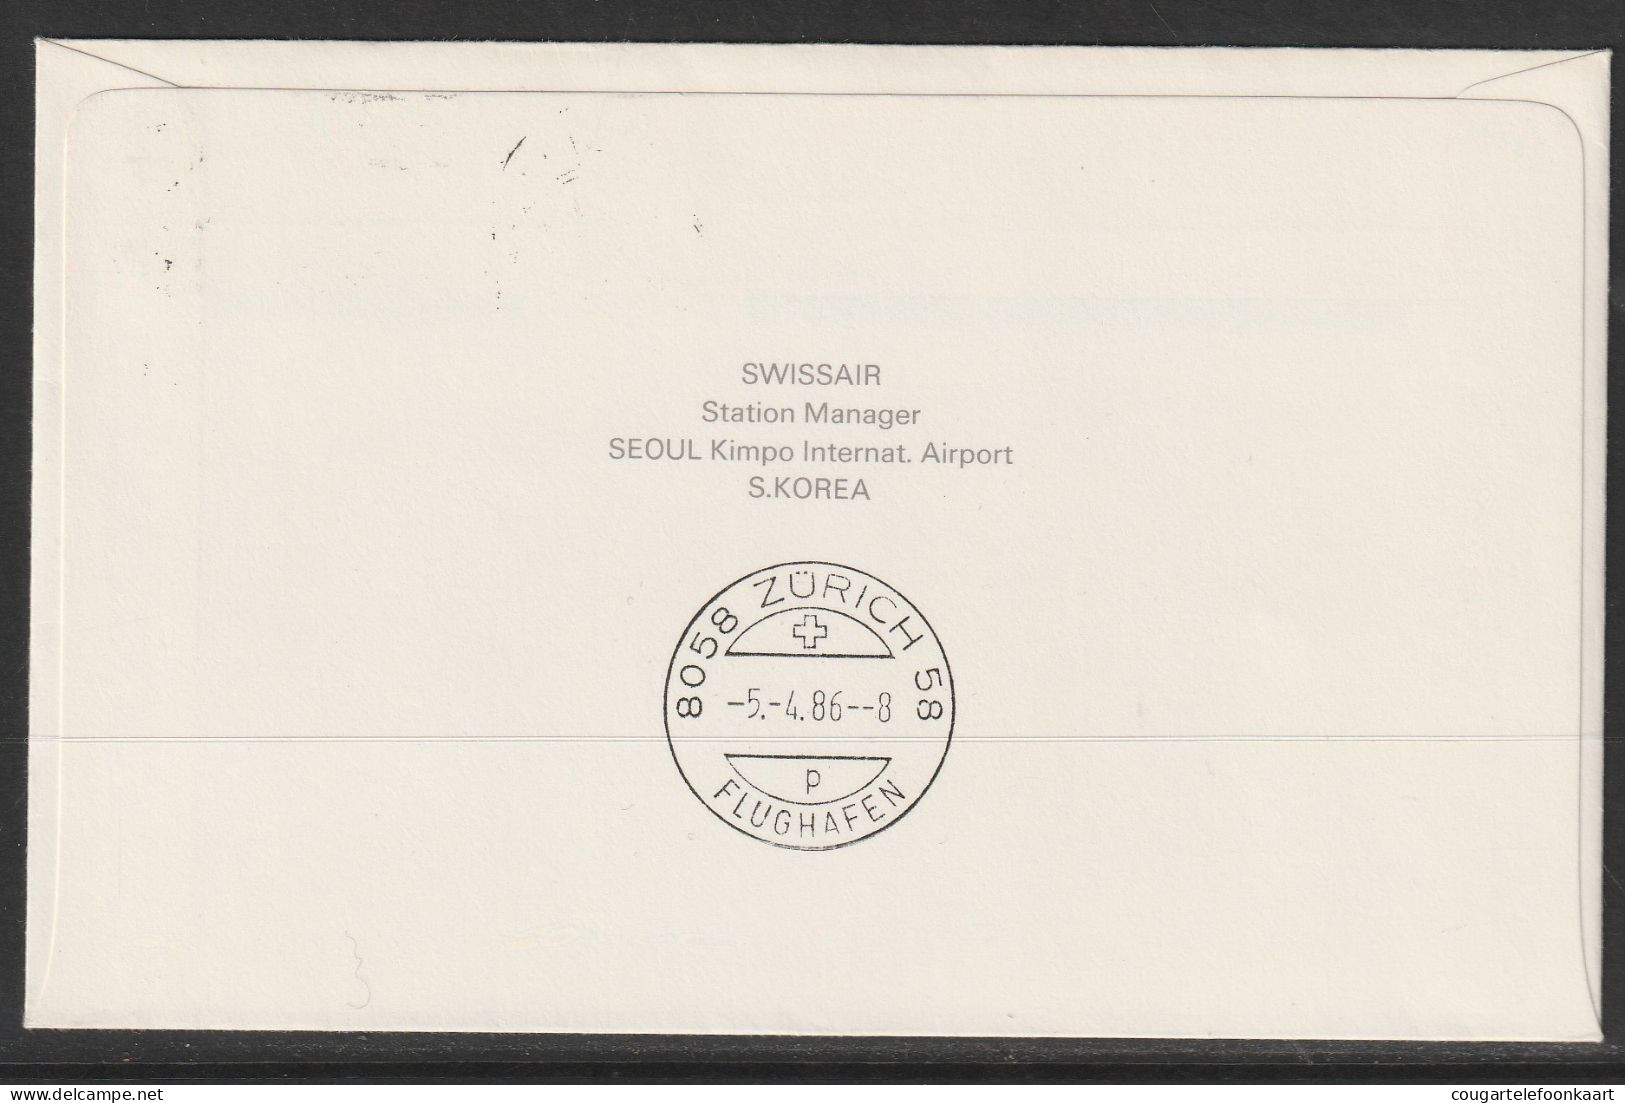 1986, Swissair, Erstflug, Seoul Korea - Zürich - Corée Du Sud